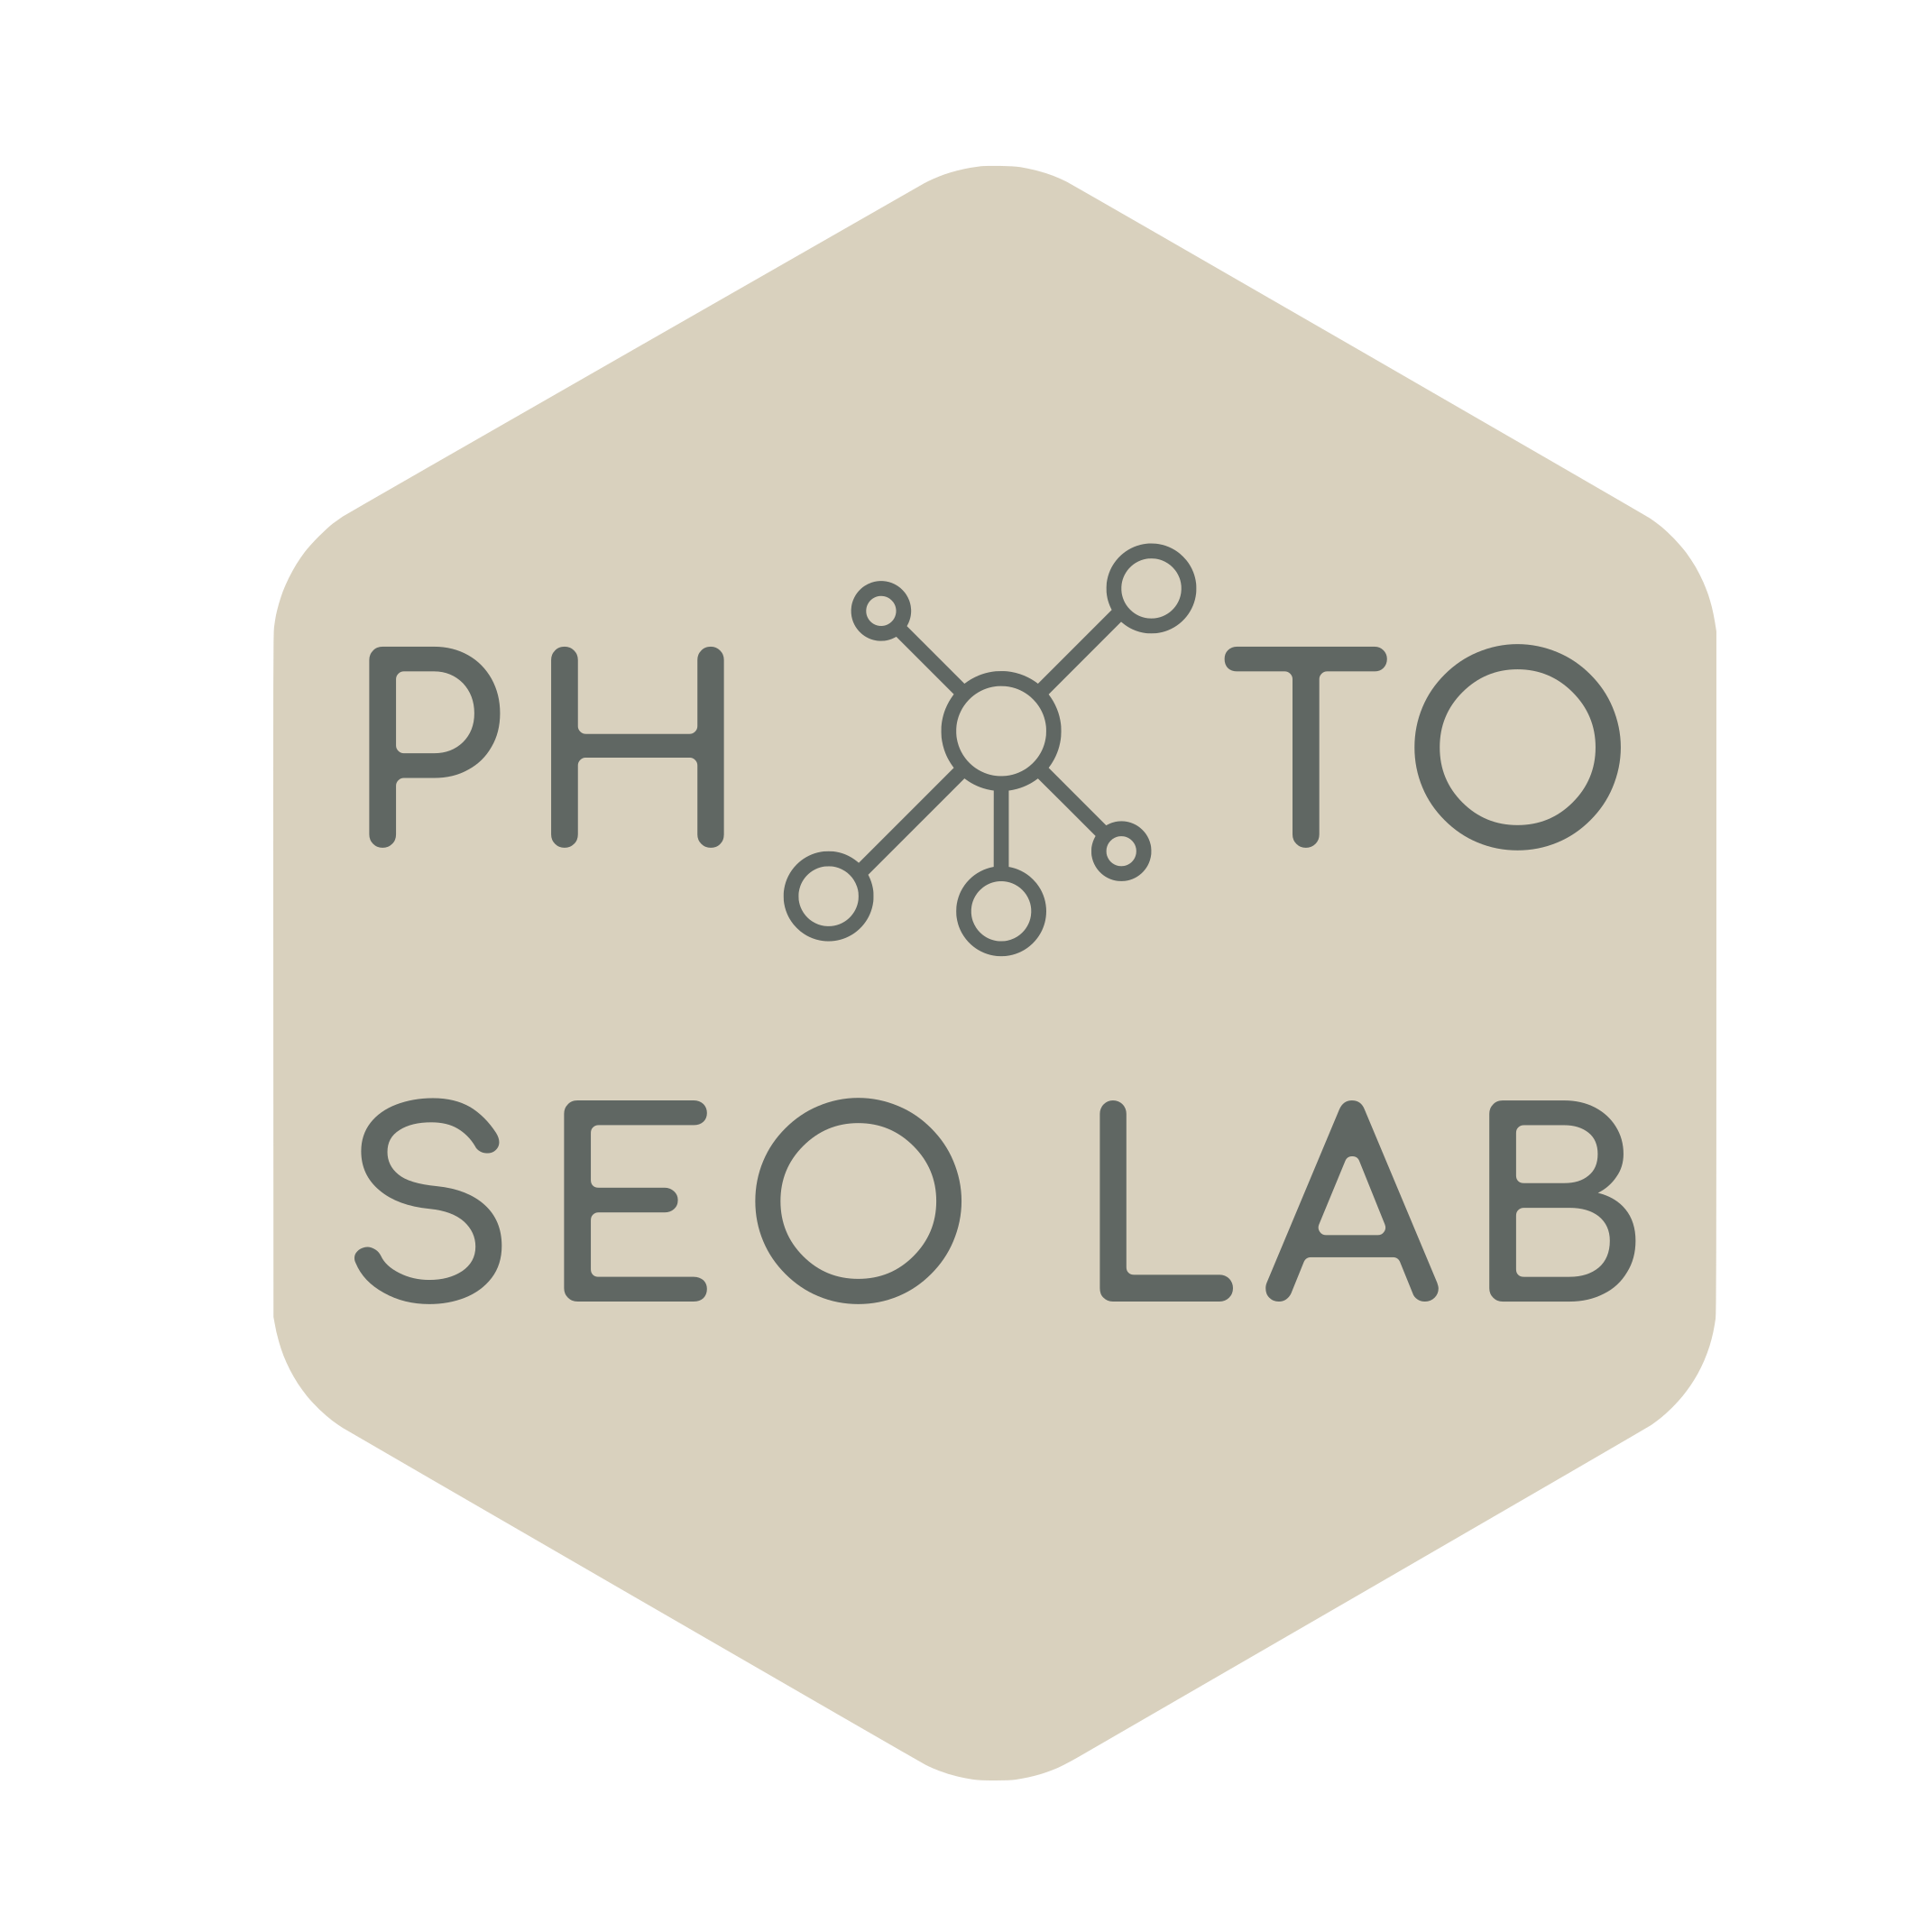 Photo SEO Lab logo